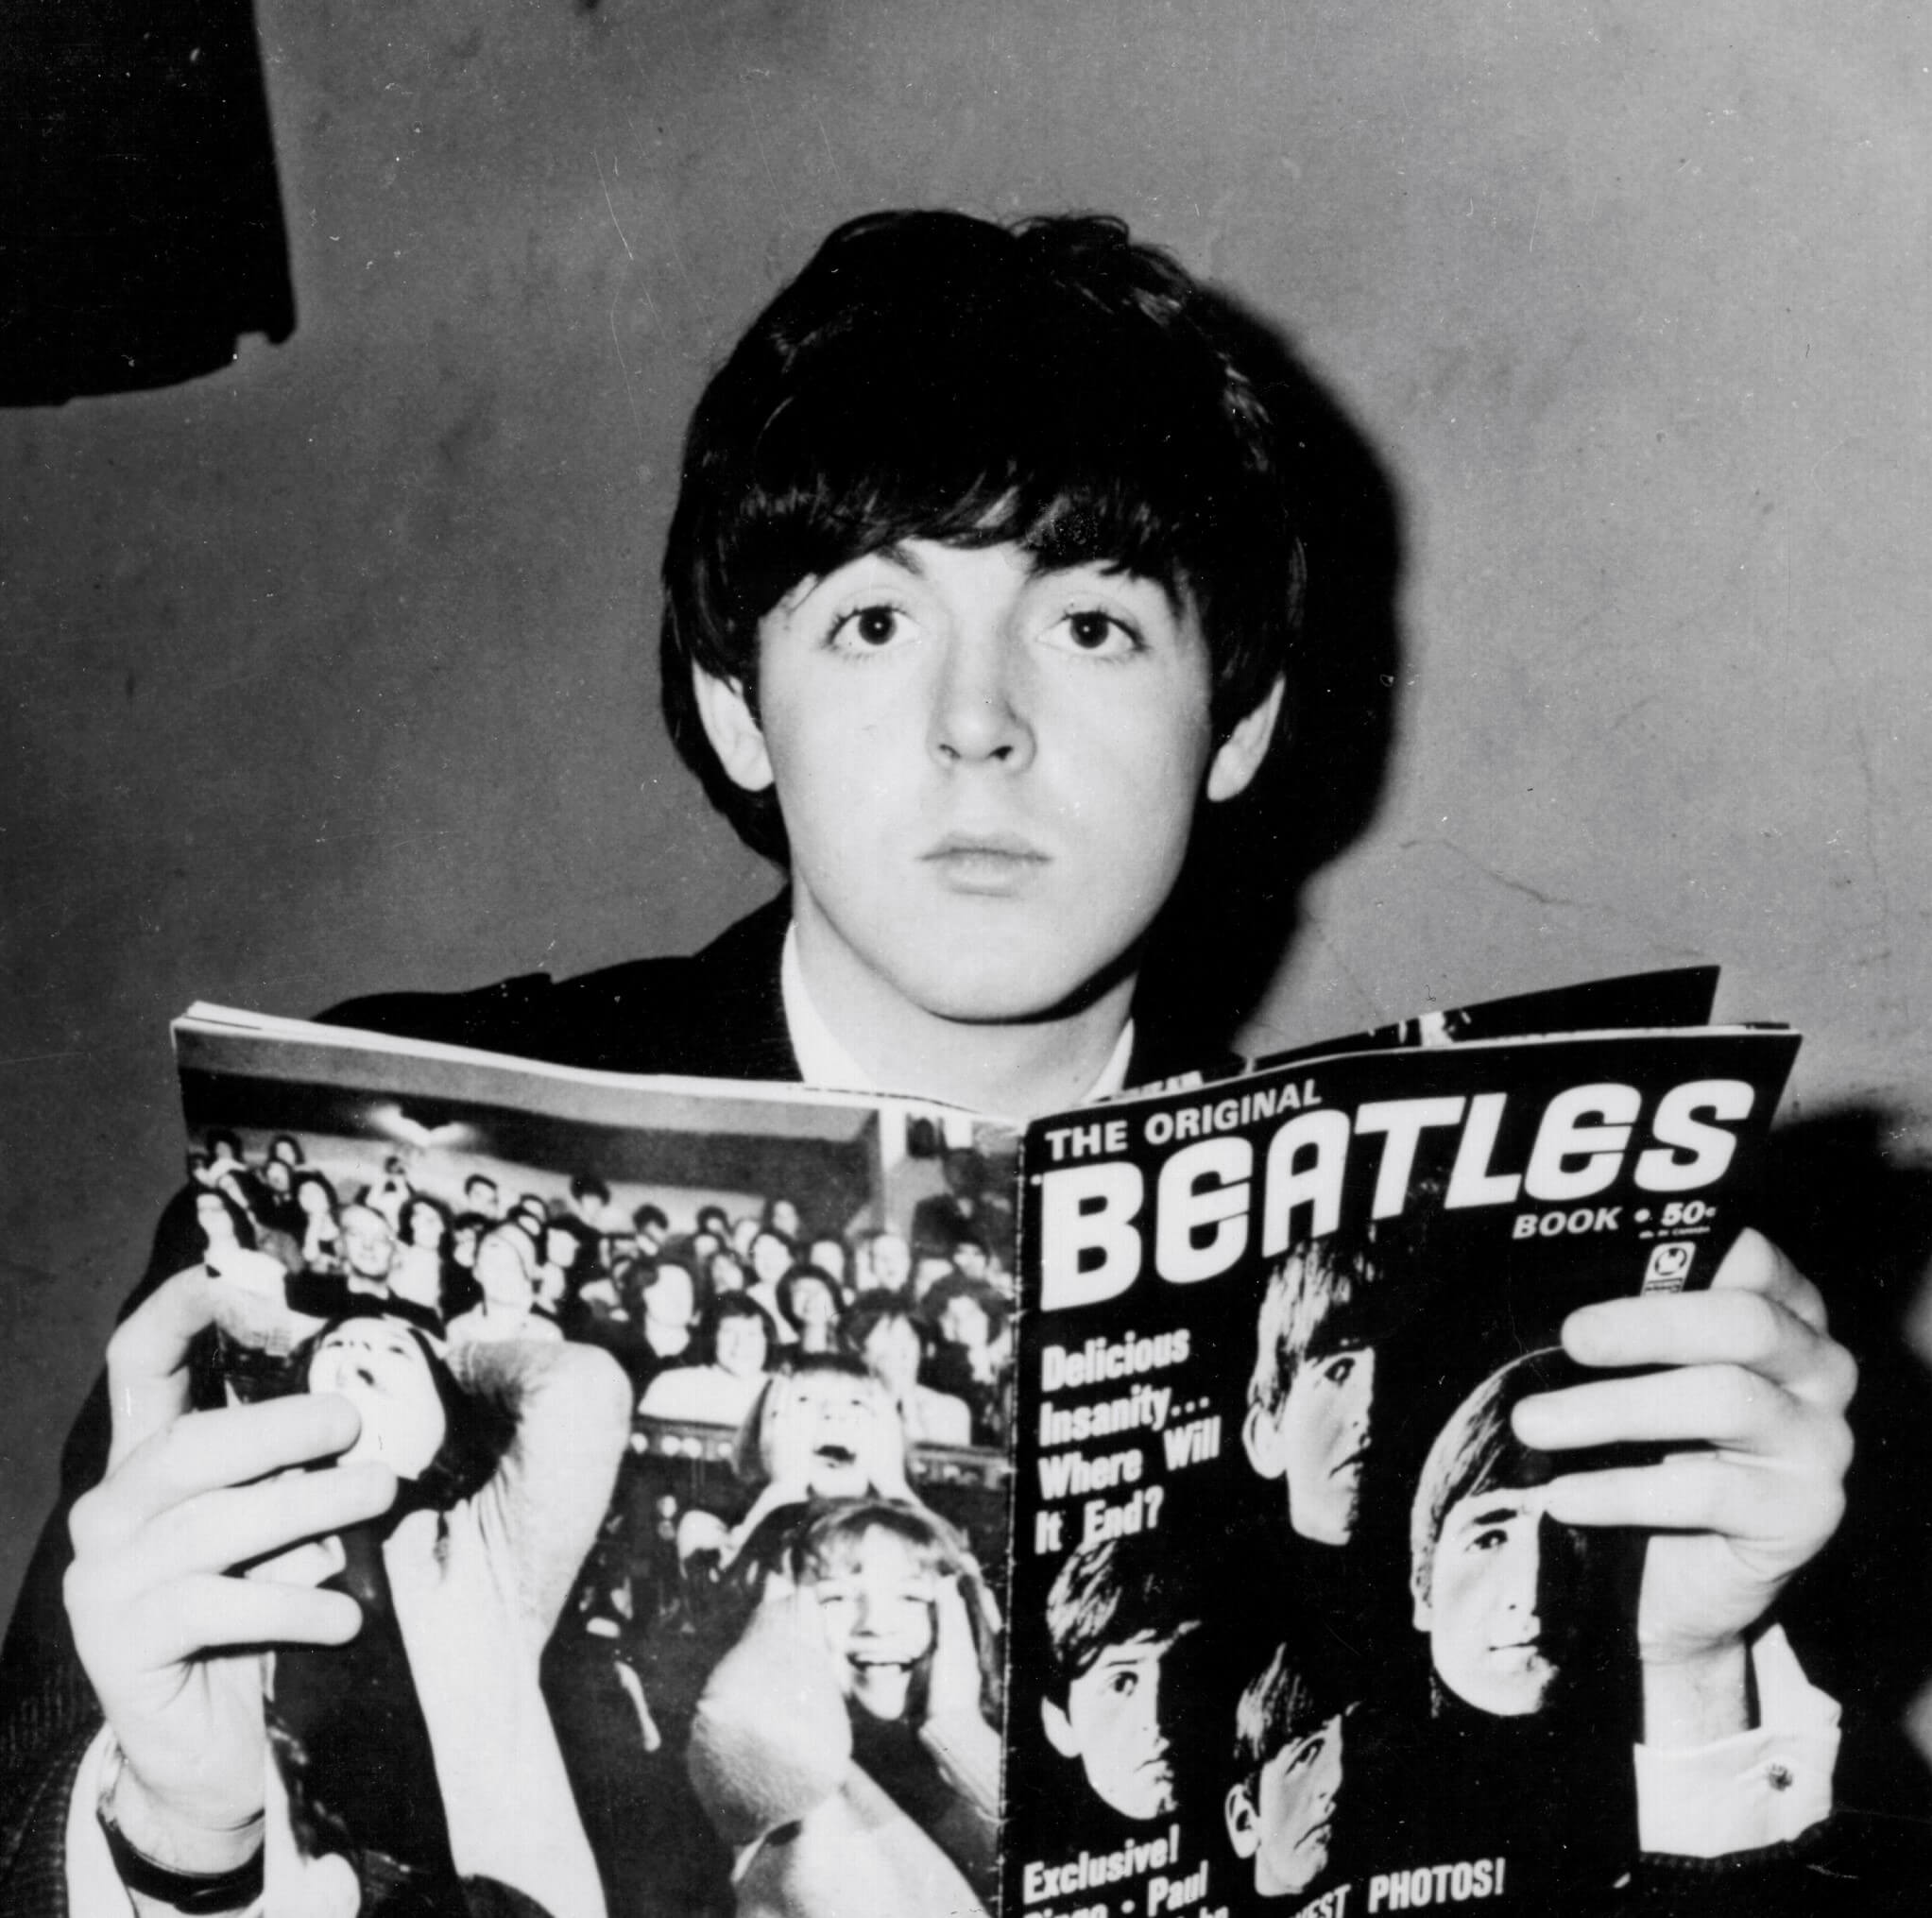 Paul McCartney with a Beatles magazine